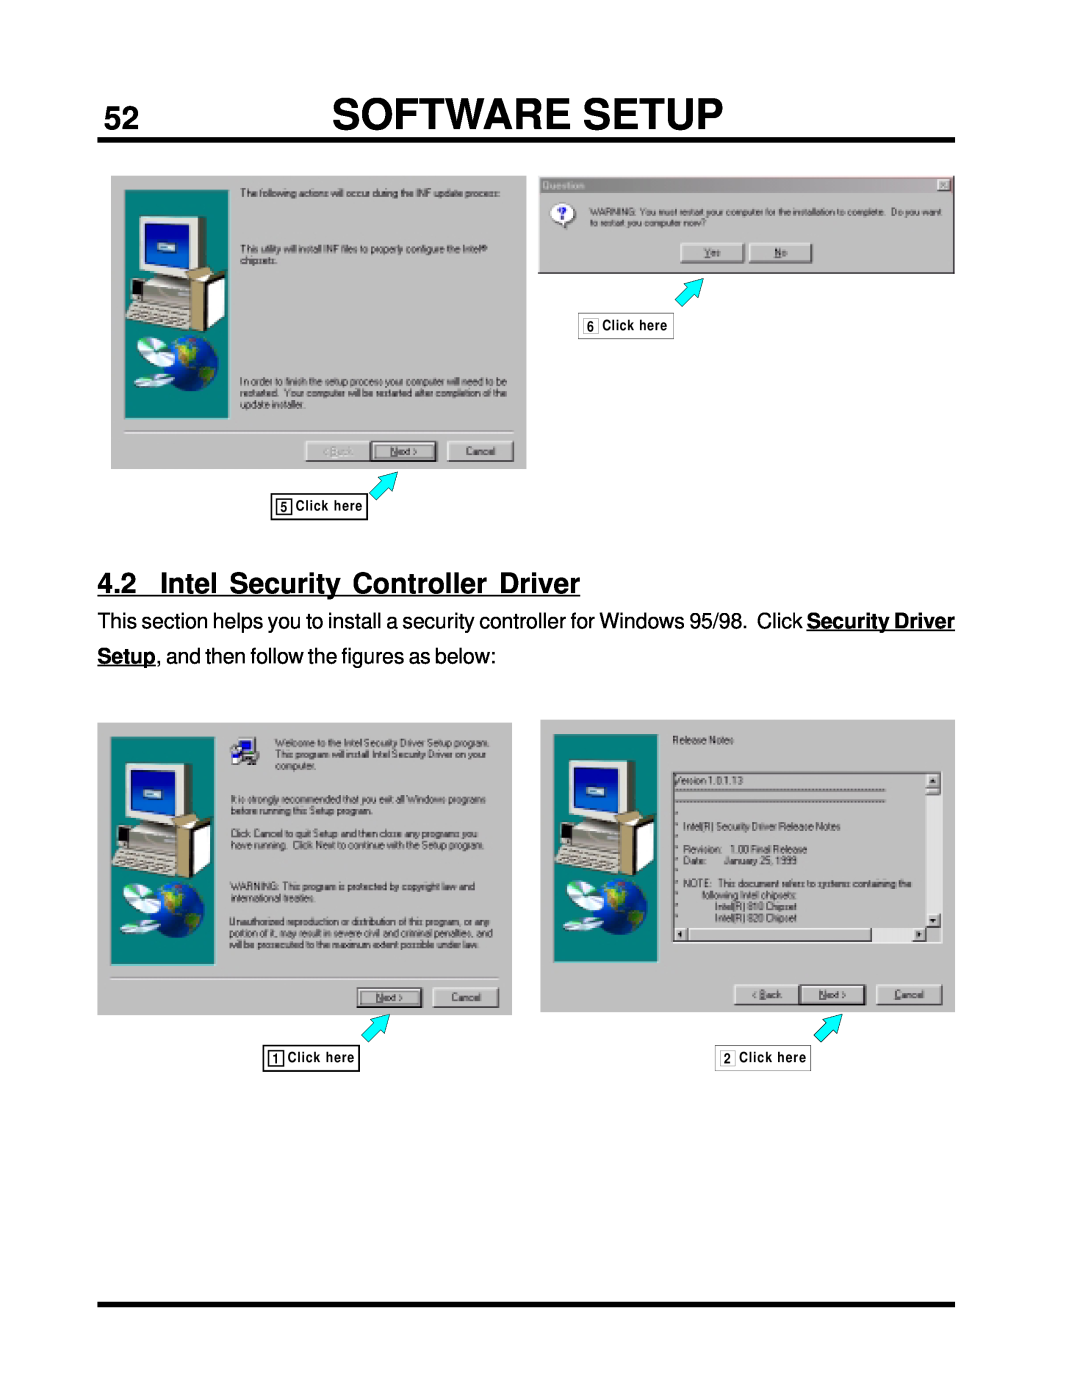 Intel TS-ASP3 user manual Intel Security Controller Driver, Software Setup, Click here 5 Click here 